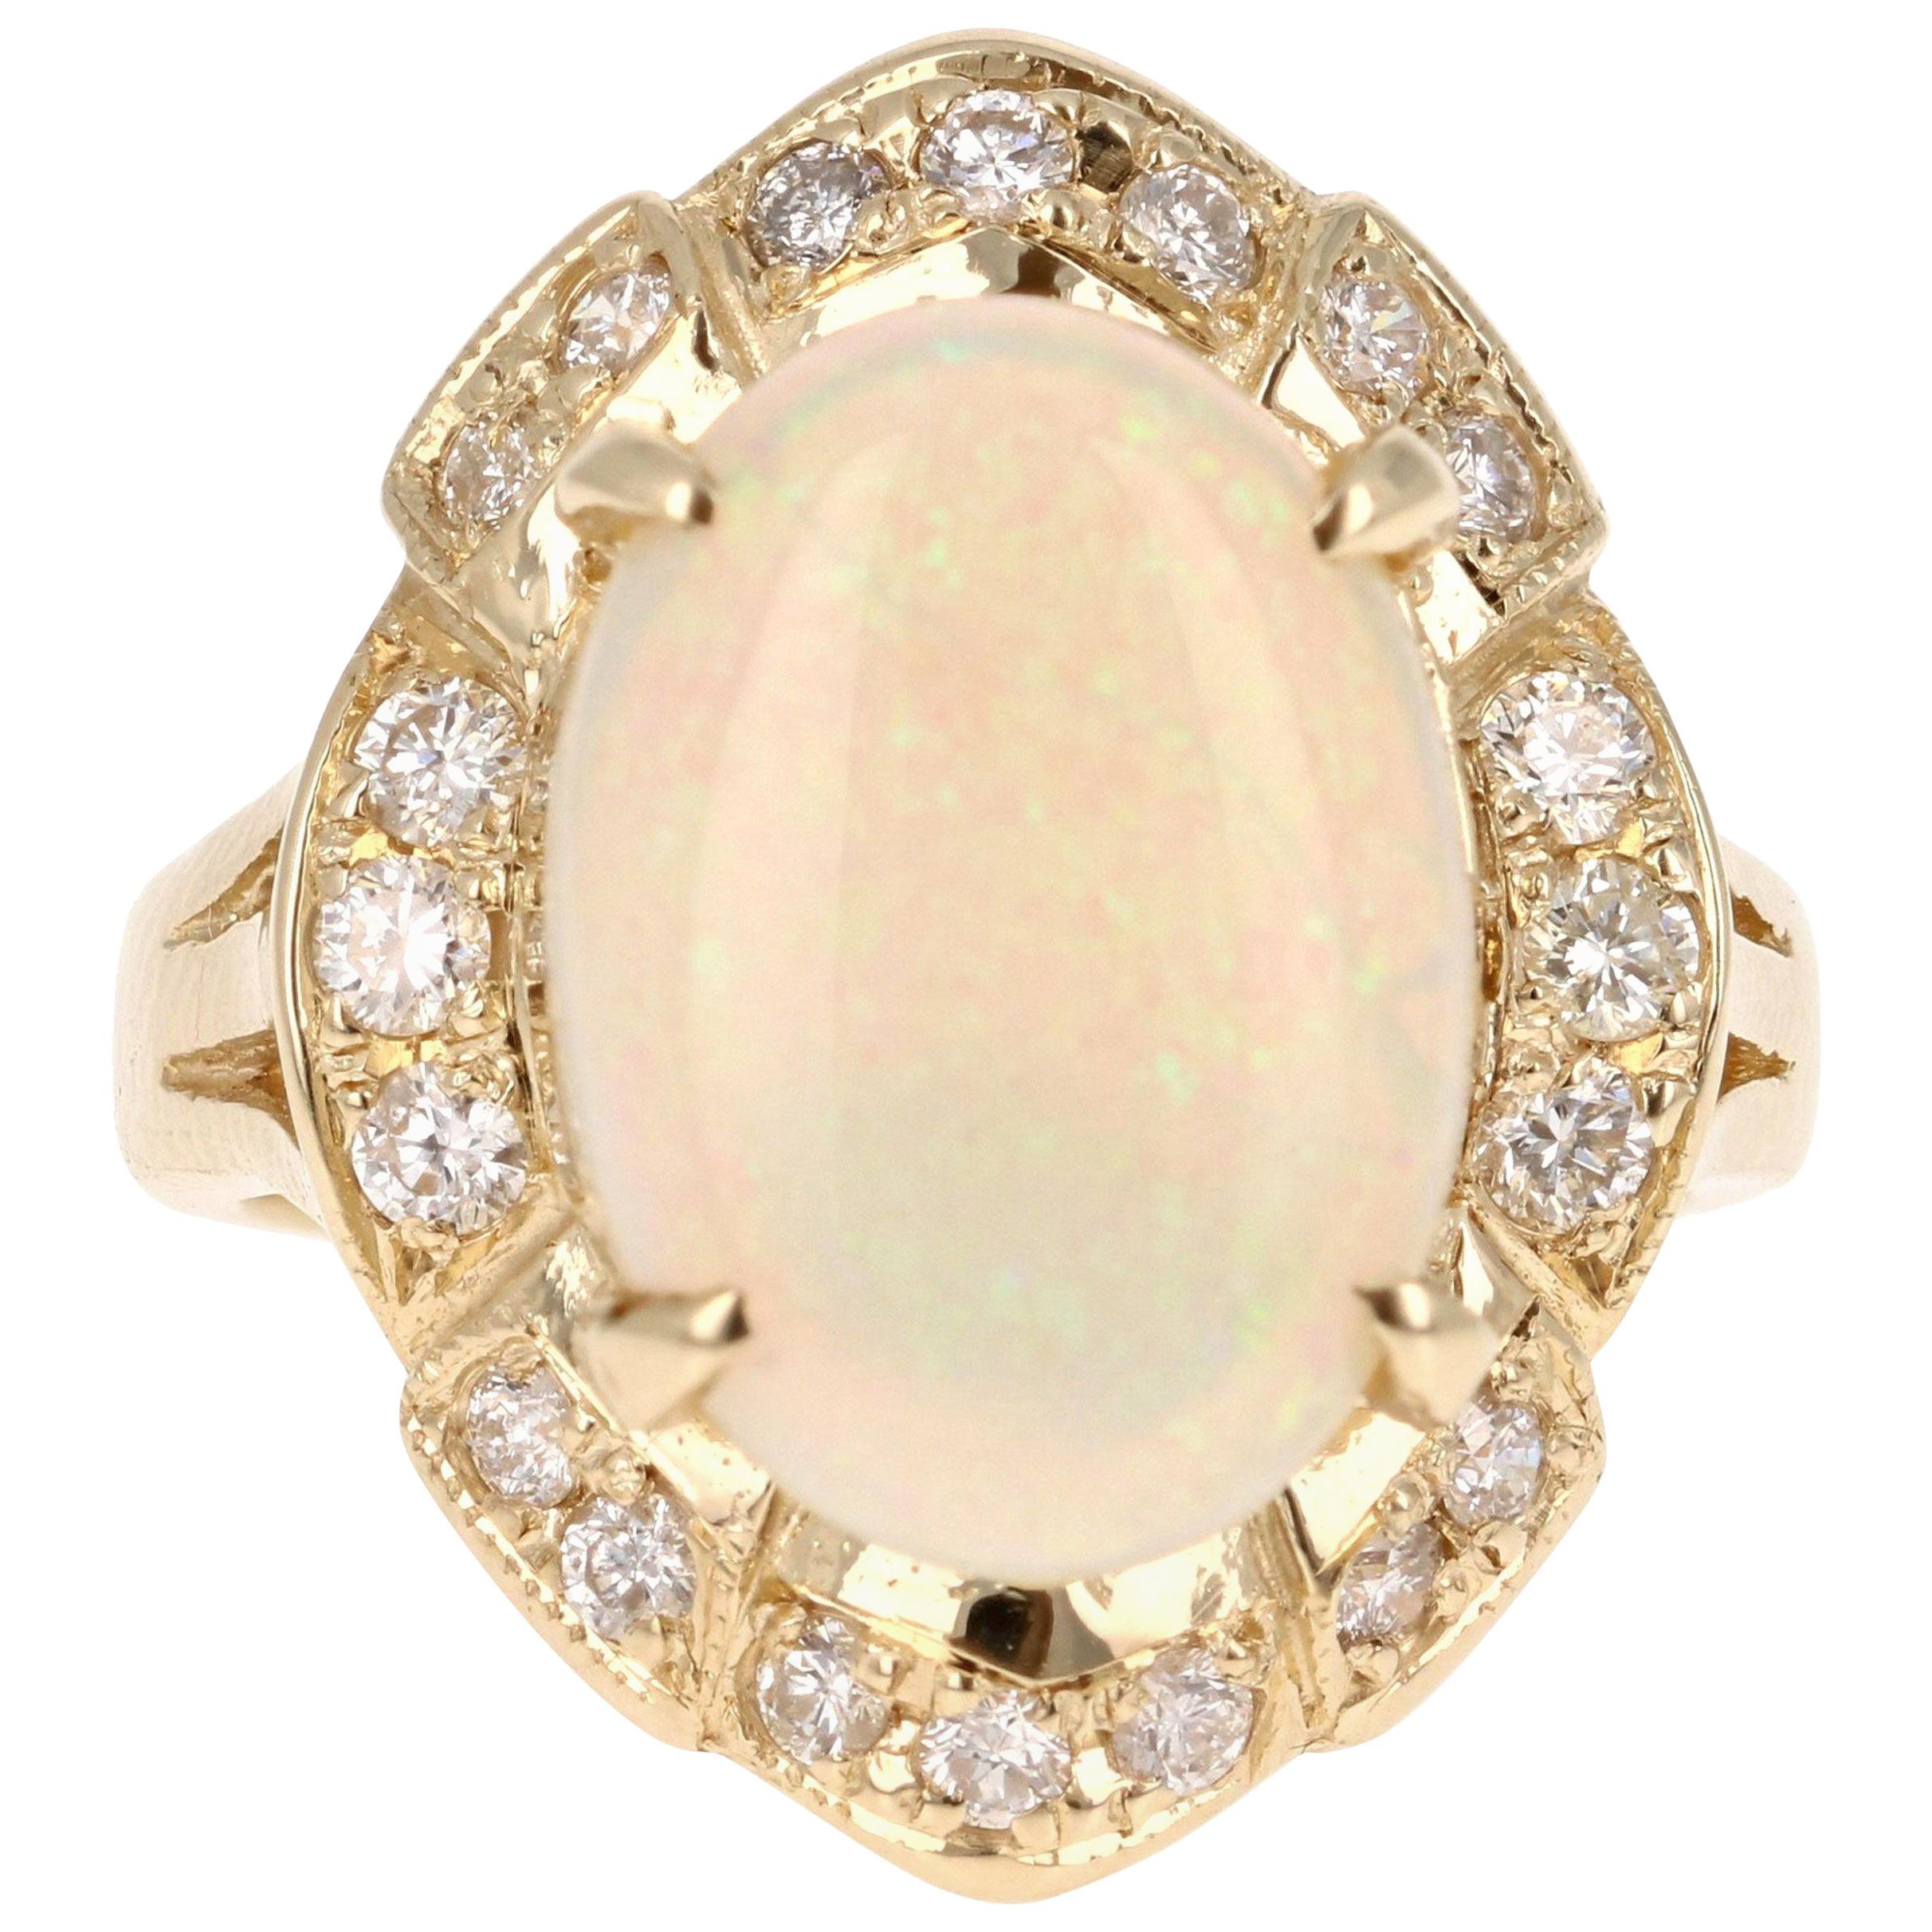 4.21 Carat Oval Cut Opal Diamond 14 Karat Yellow Gold Ring